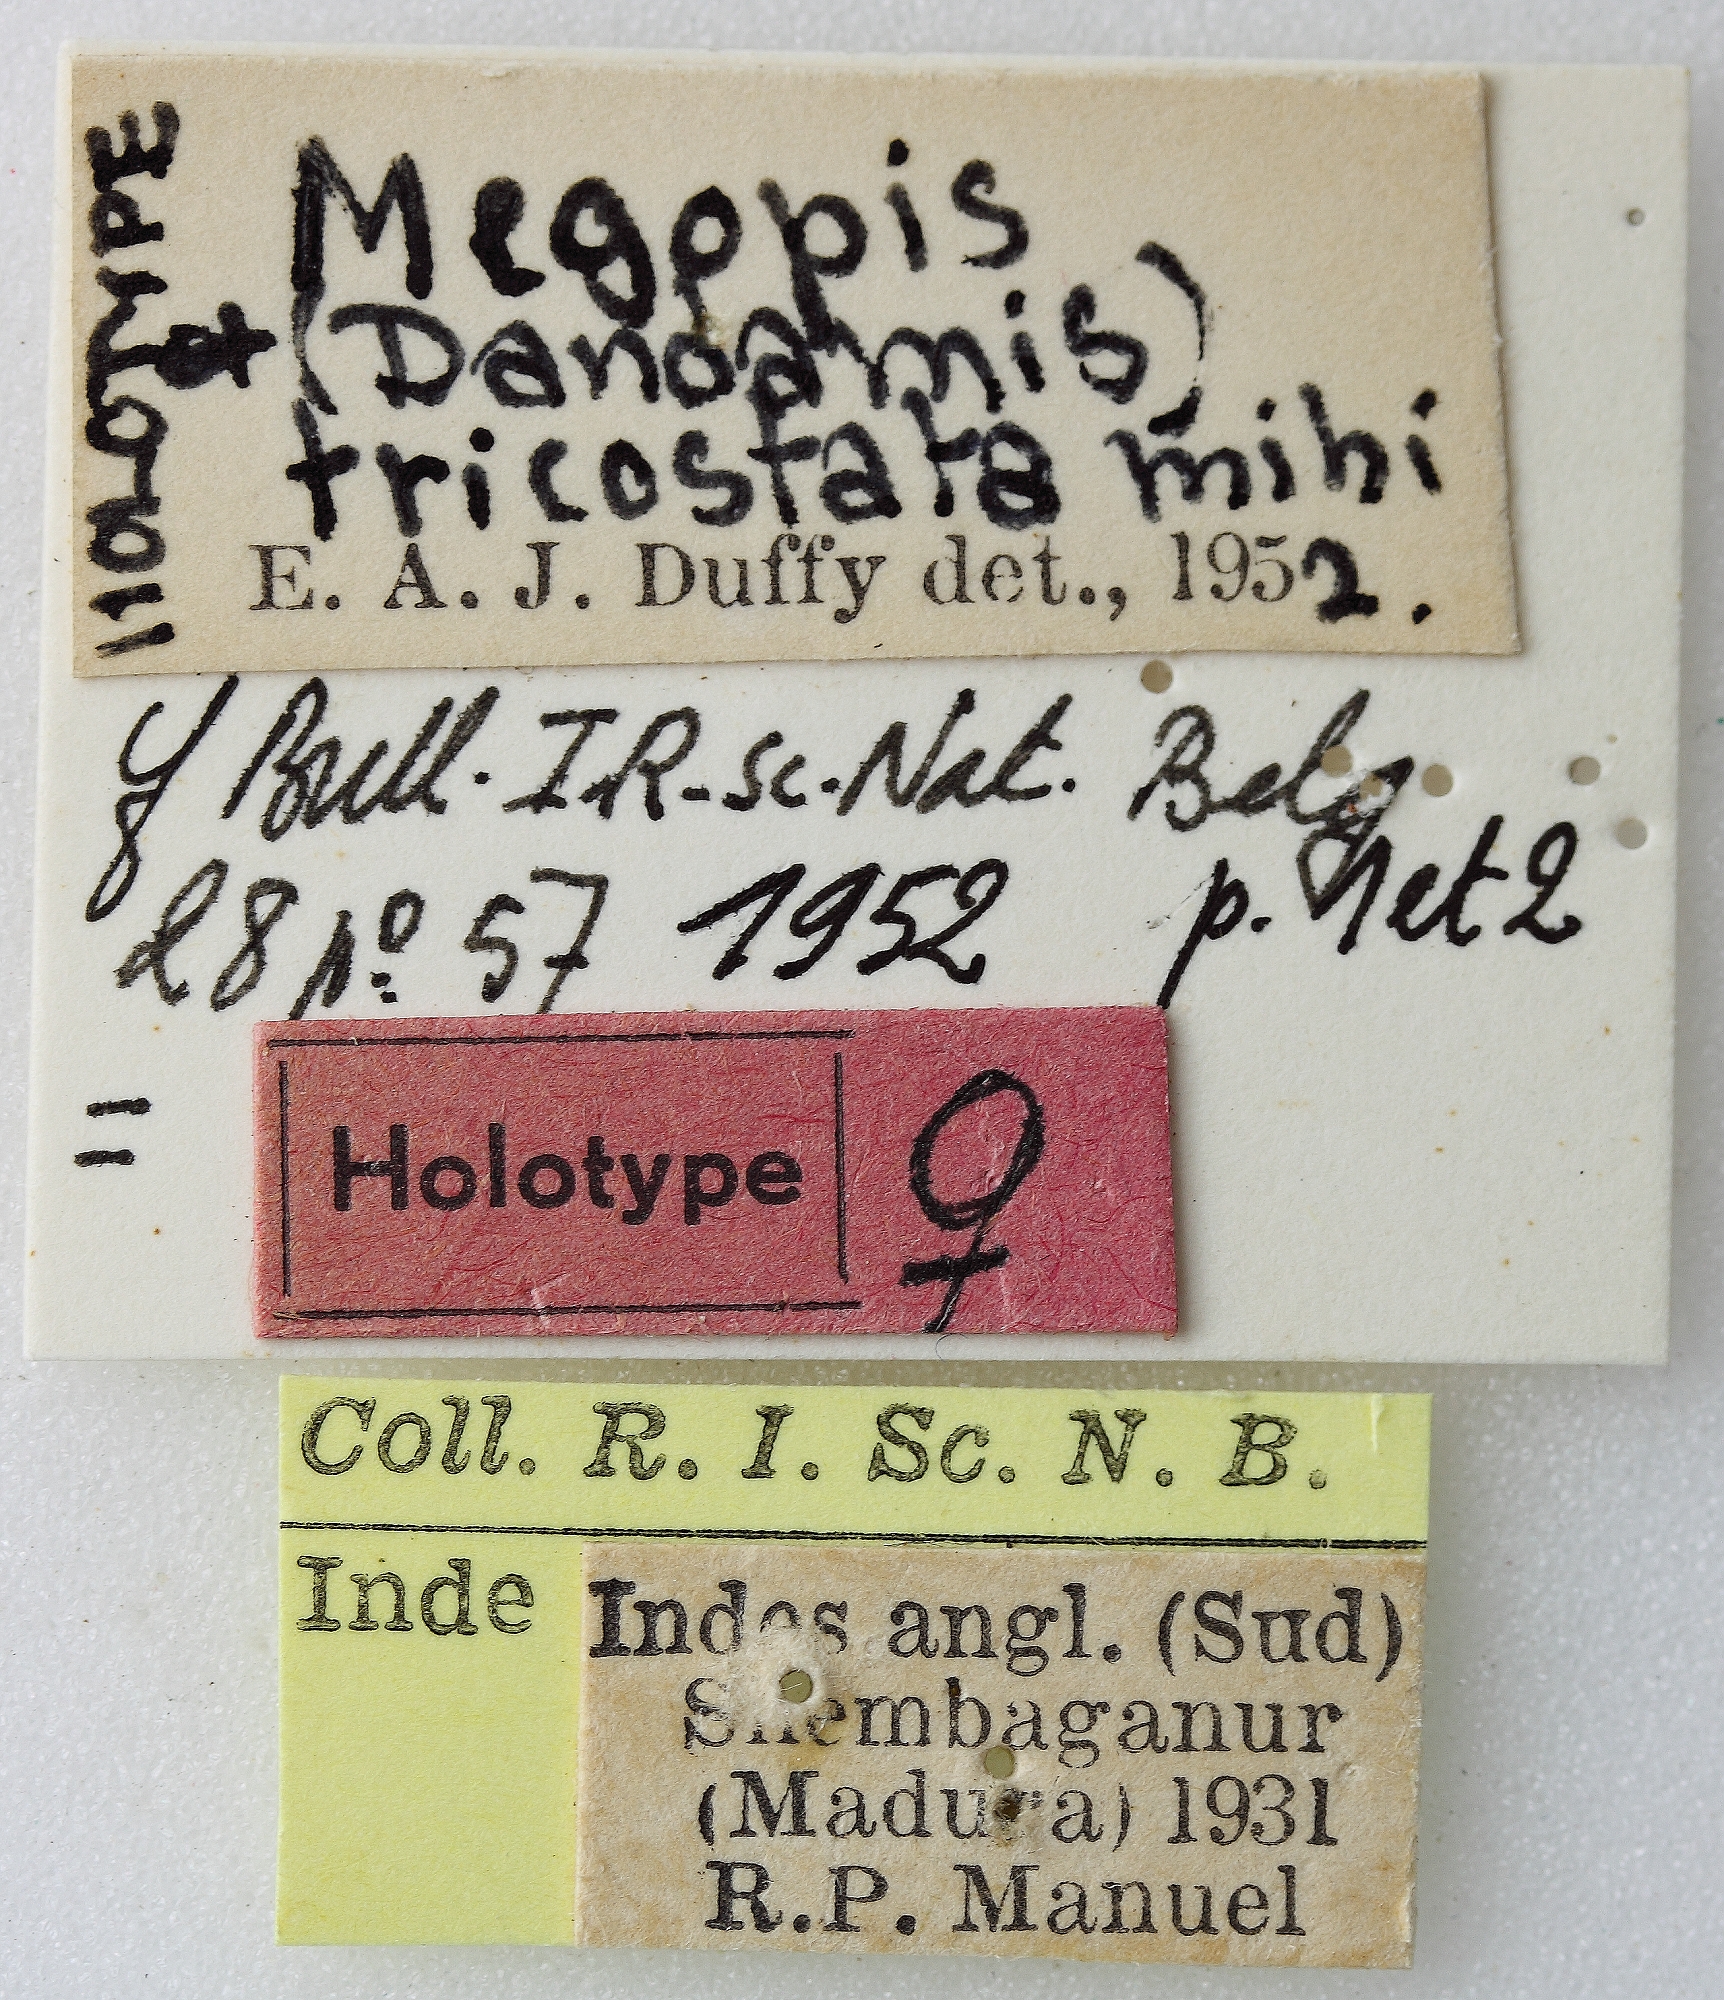 Megopis (Dandamis) tricostata 01 00 Holotype F 036 BRUS 201405.jpg